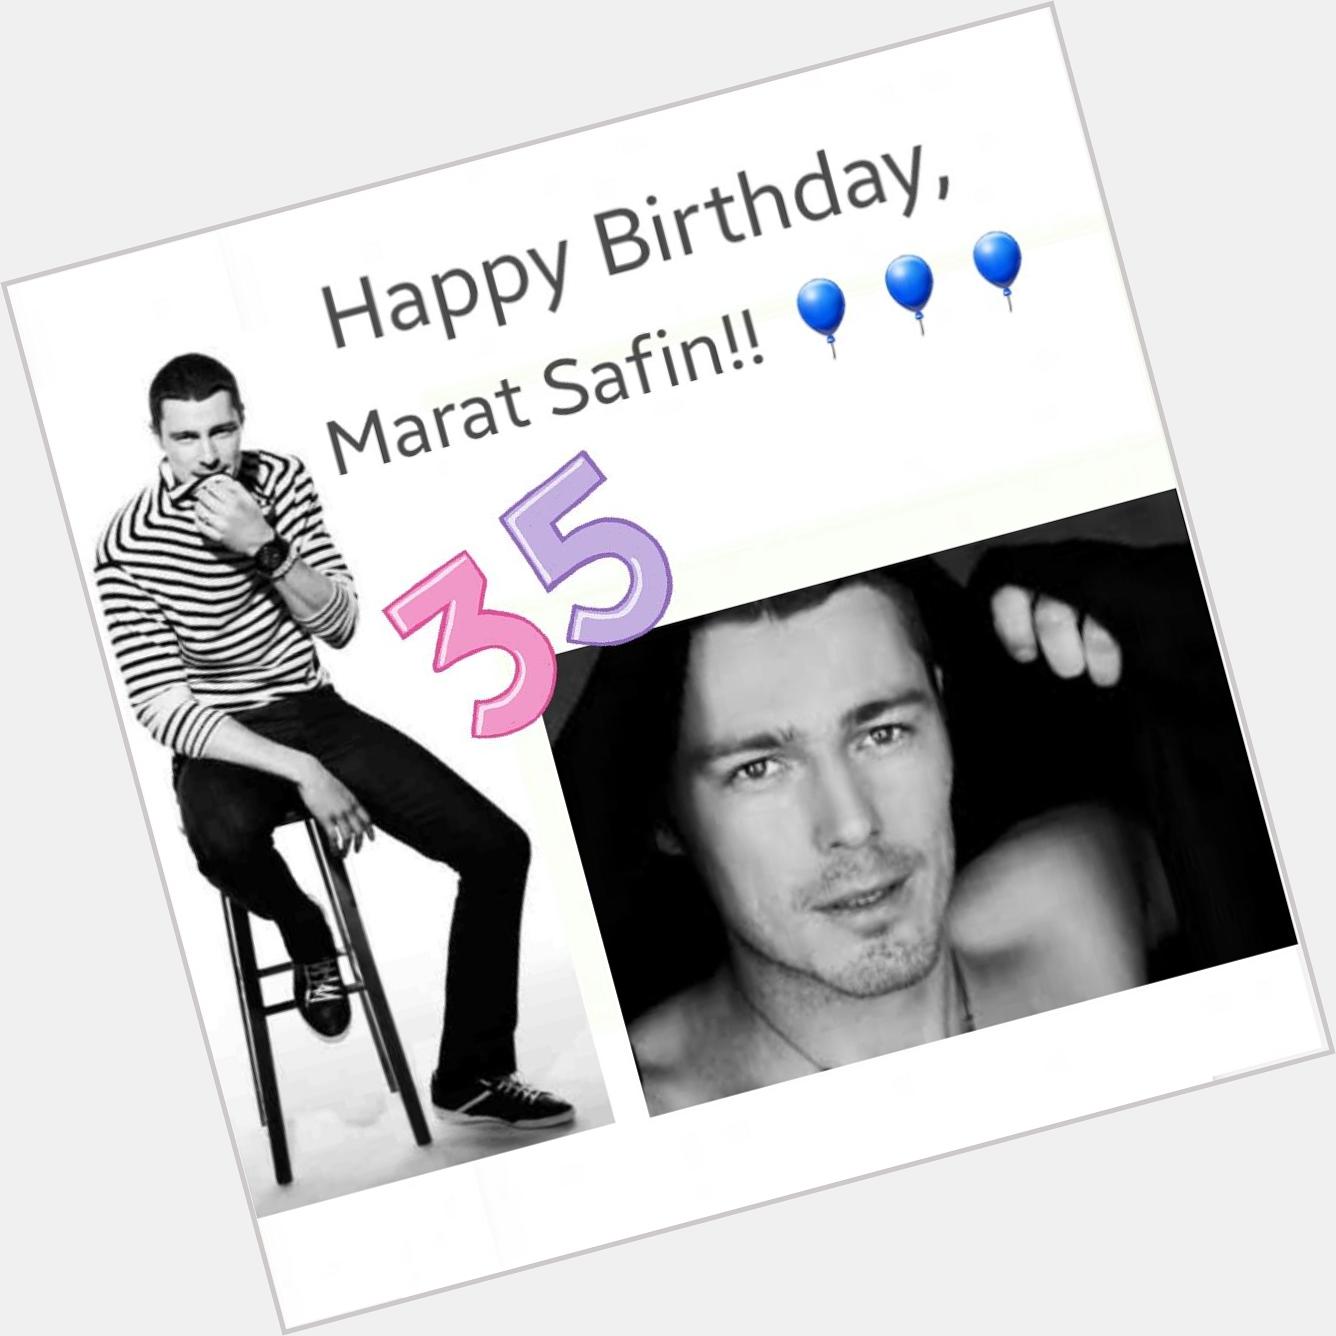   Happy Birthday, Marat Safin!!! 